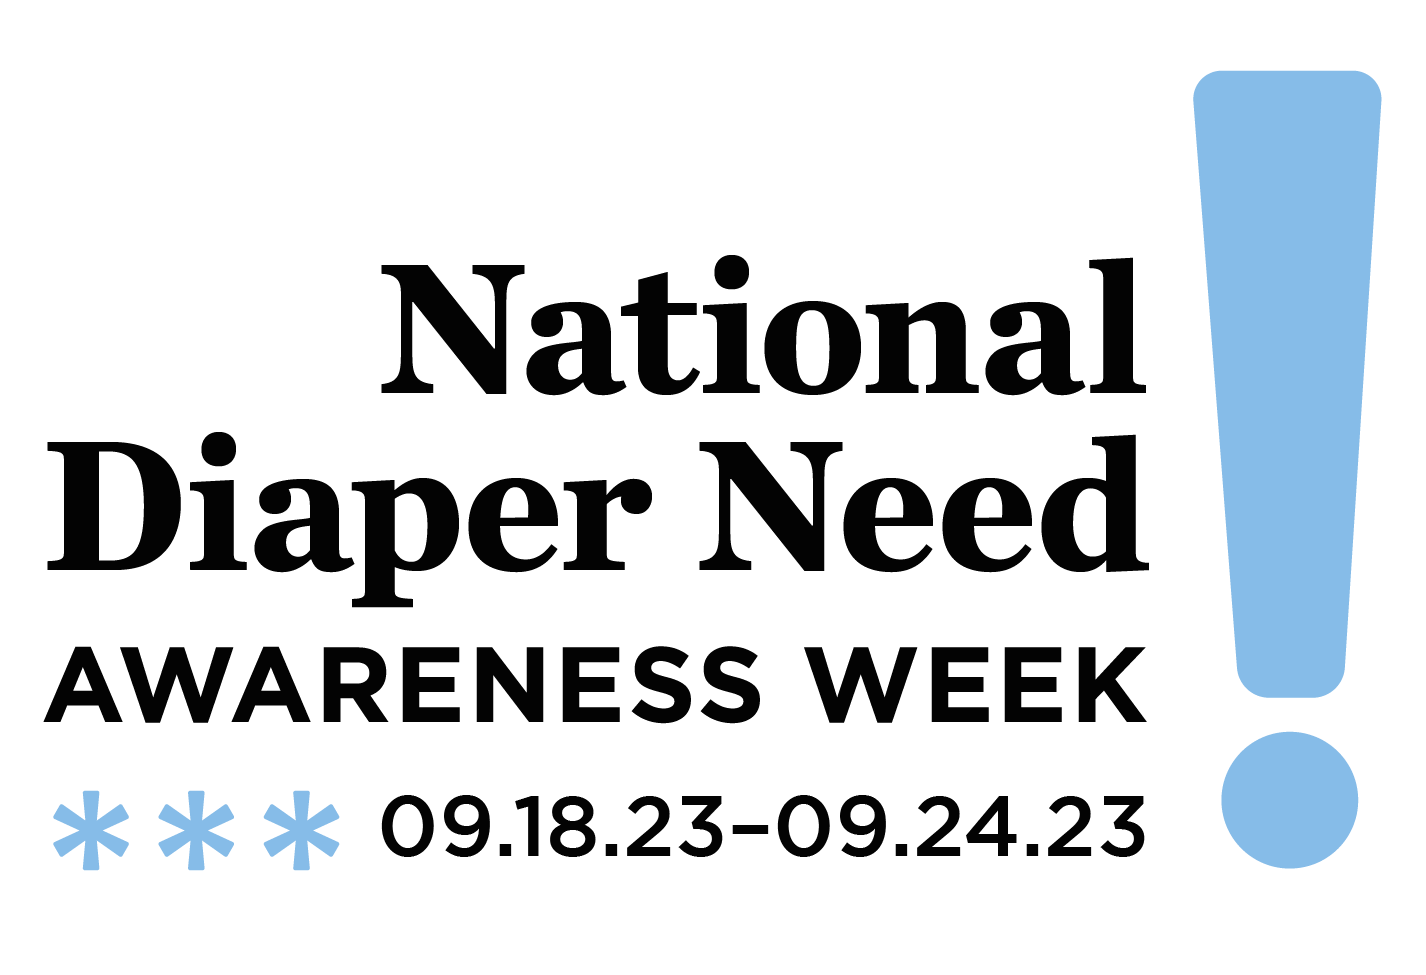 National Diaper Need Awareness Week ShareBaby